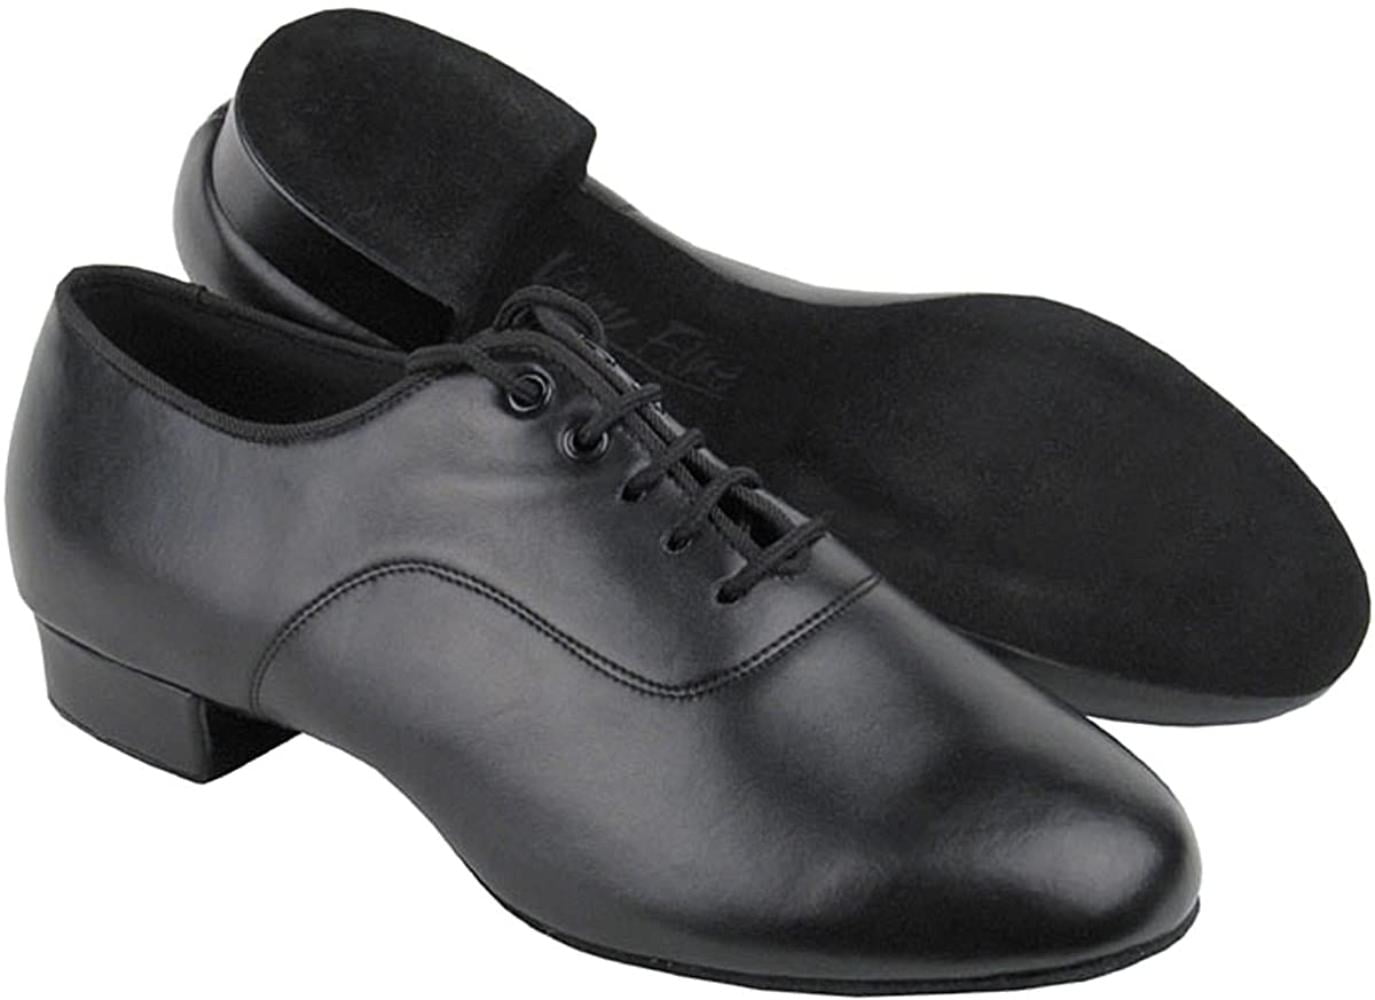 Куфар обувь мужская. Grishko обувь мужская для танго. Туфли s&s Dance Sport. Танцевальные туфли мужские. Бальные туфли мужские.